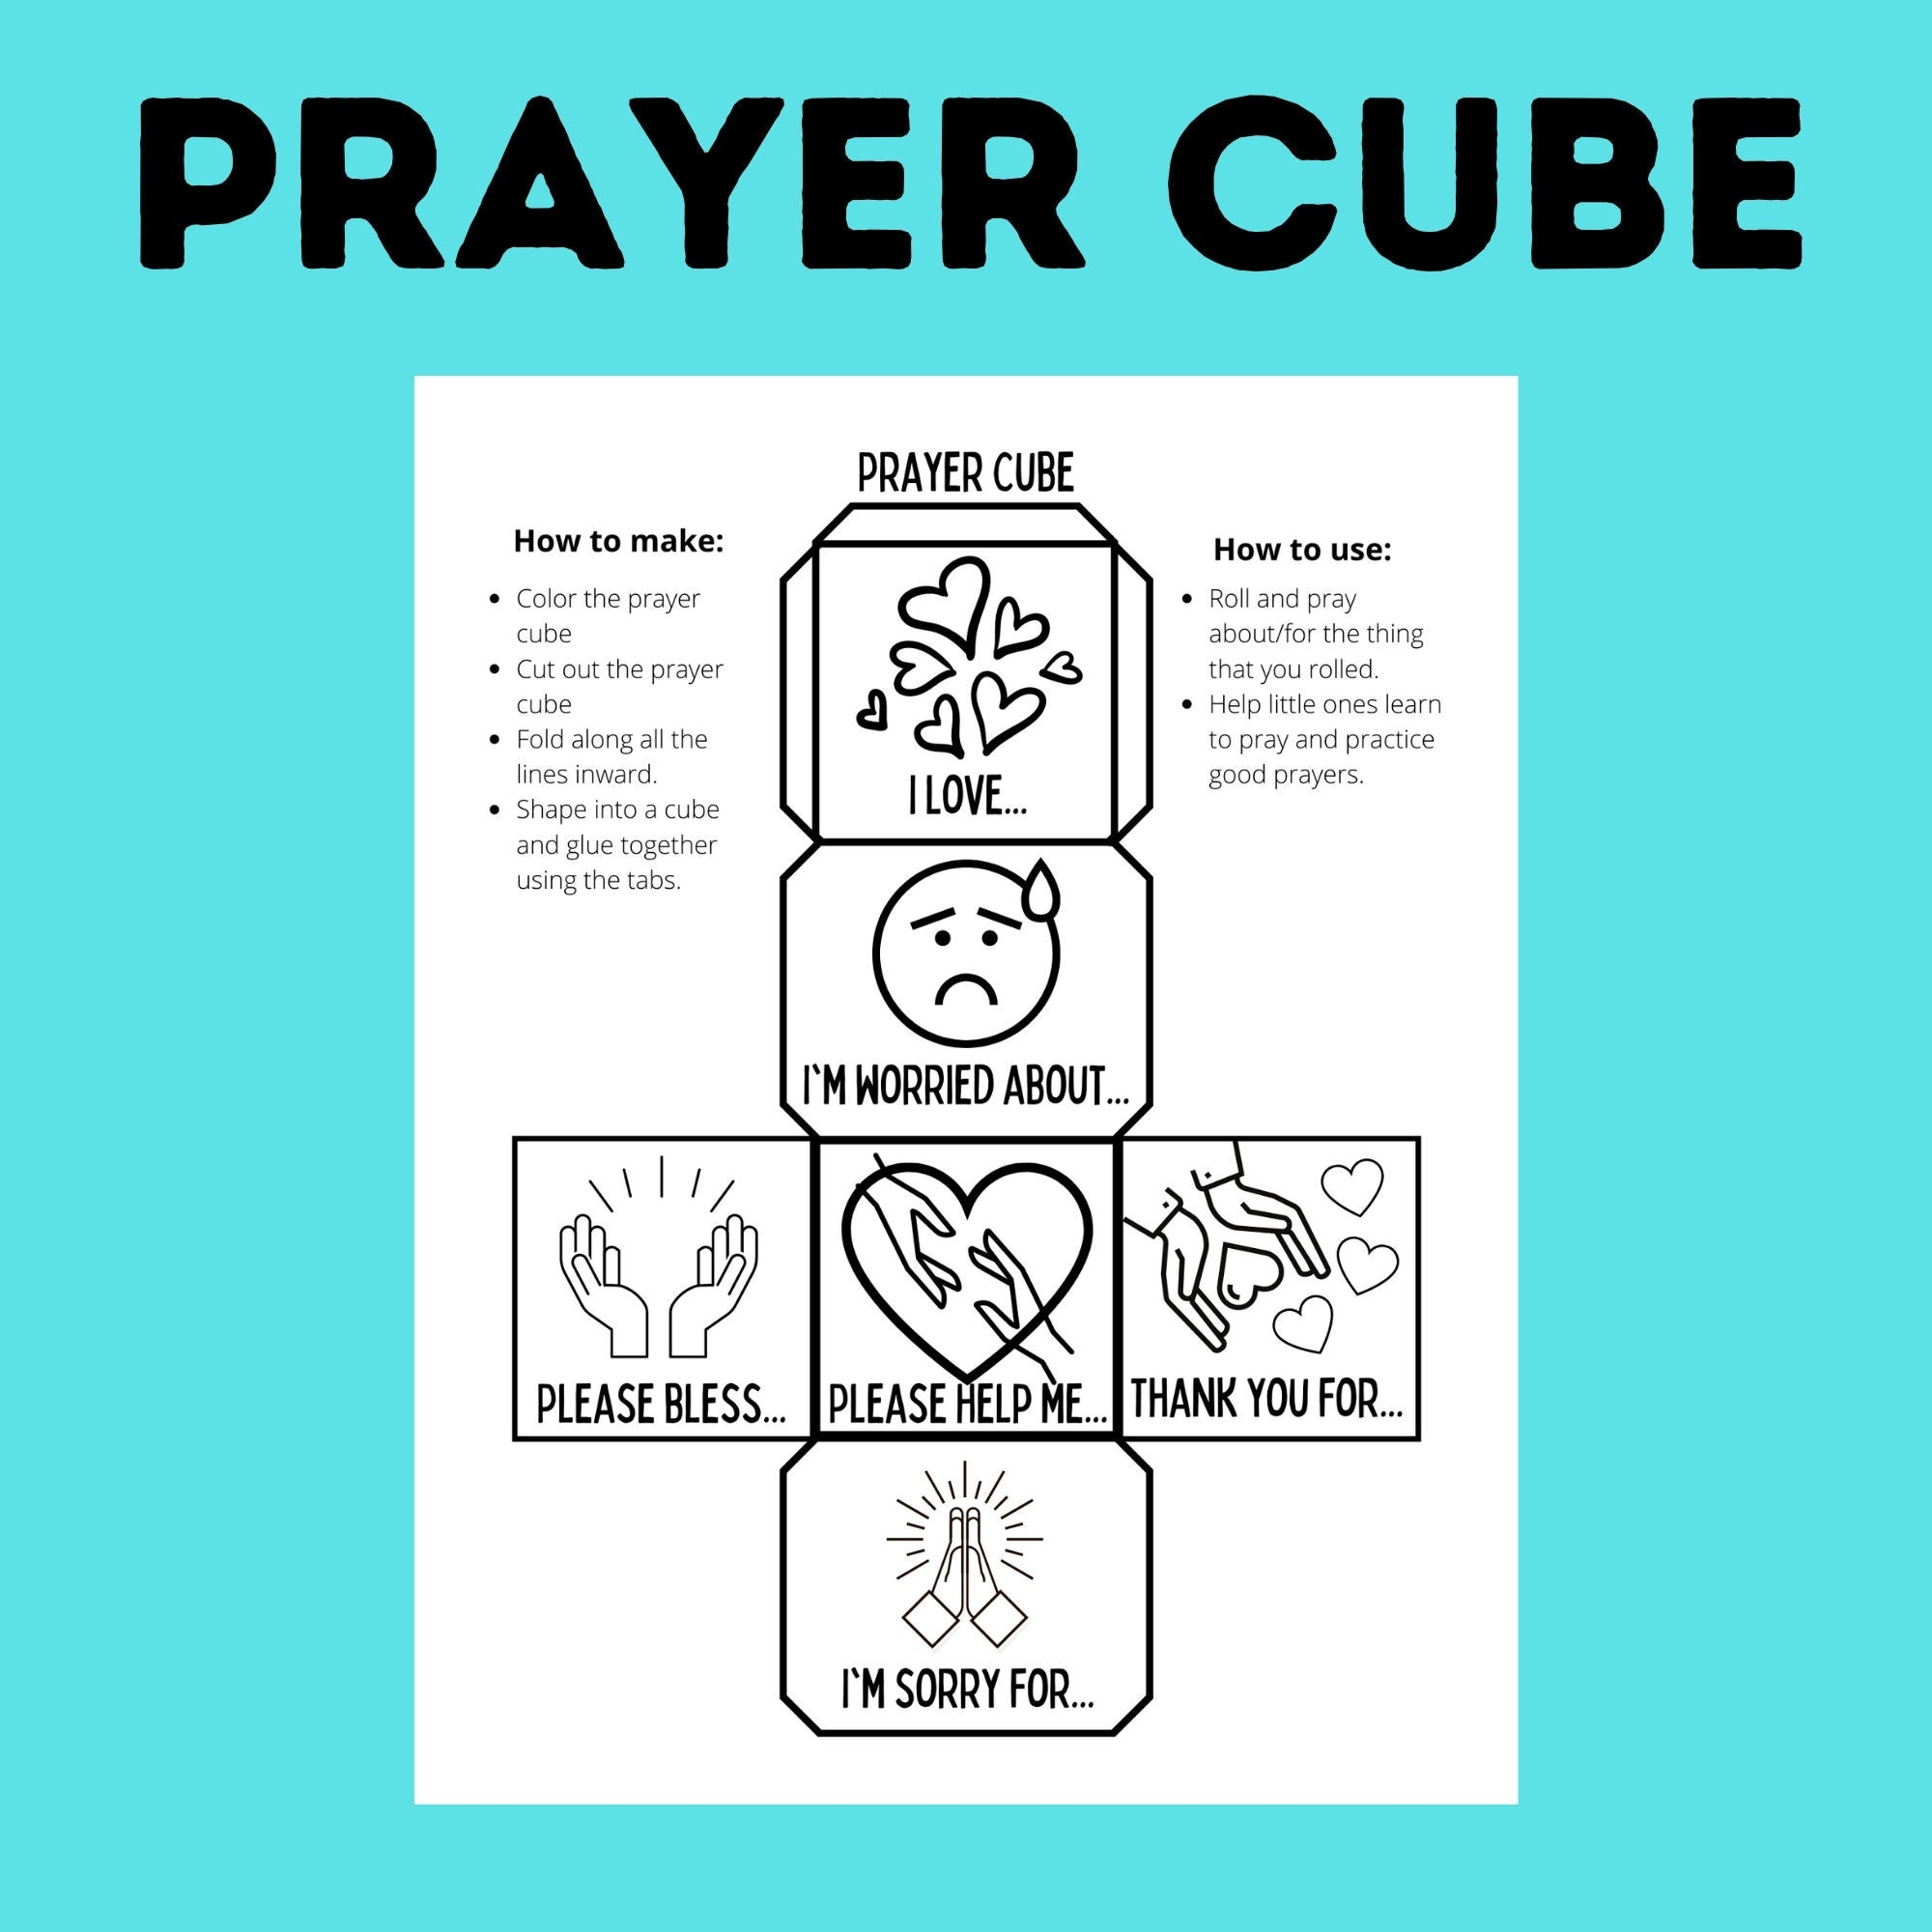 Prayer Cube Prayer Craft Prayer Cube For Kids Prayer Game Prayer Activities Toddler Activities LDS Prayer Activity Etsy